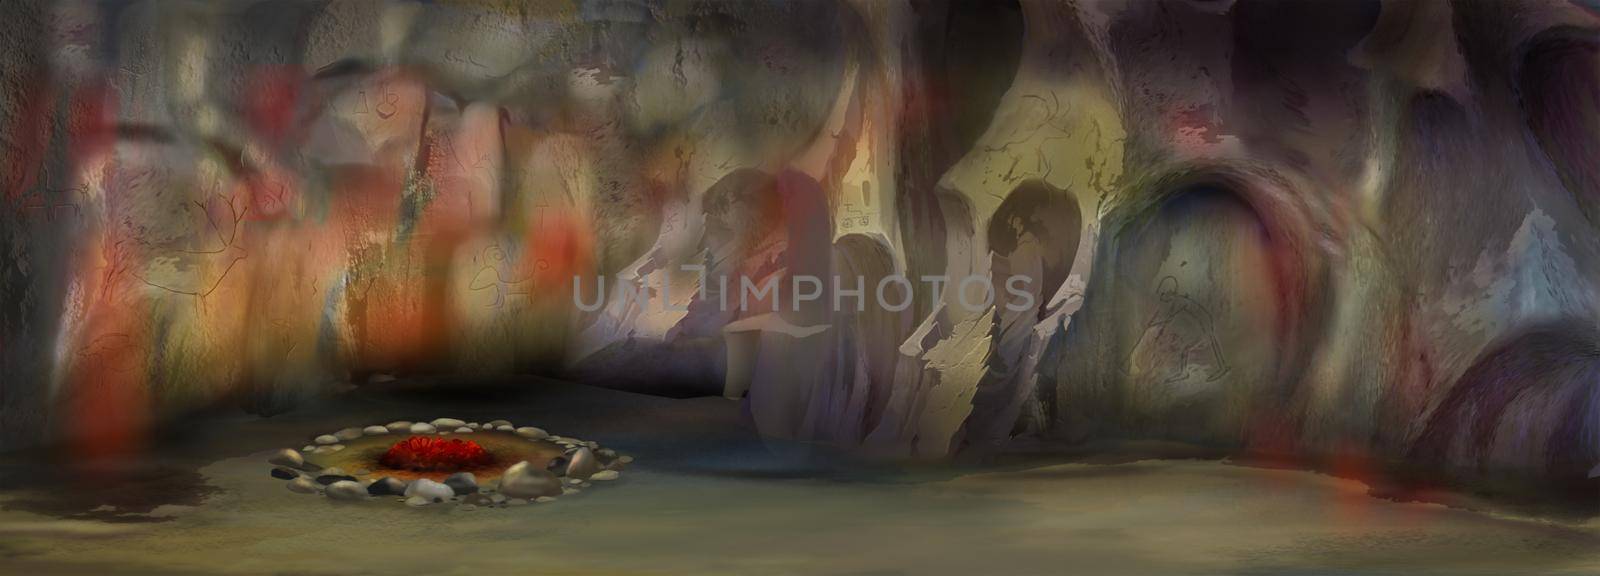 Caveman cave in prehistoric era. Digital Painting Background, Illustration.